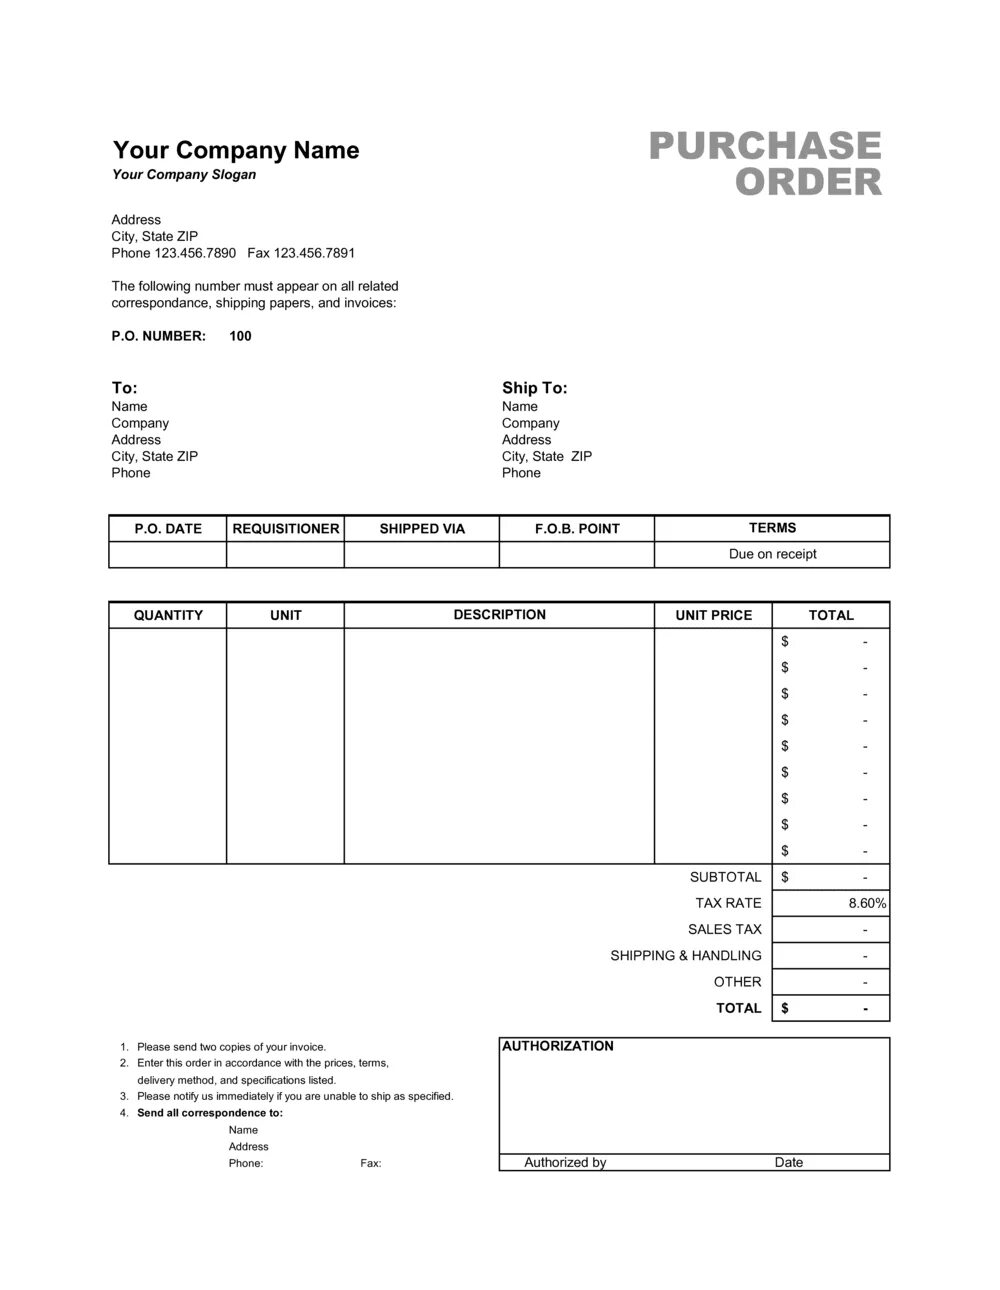 Order pdf. Purchase order. Инвойс с фрахтом. Purchase order form образец. Purchase Invoice.